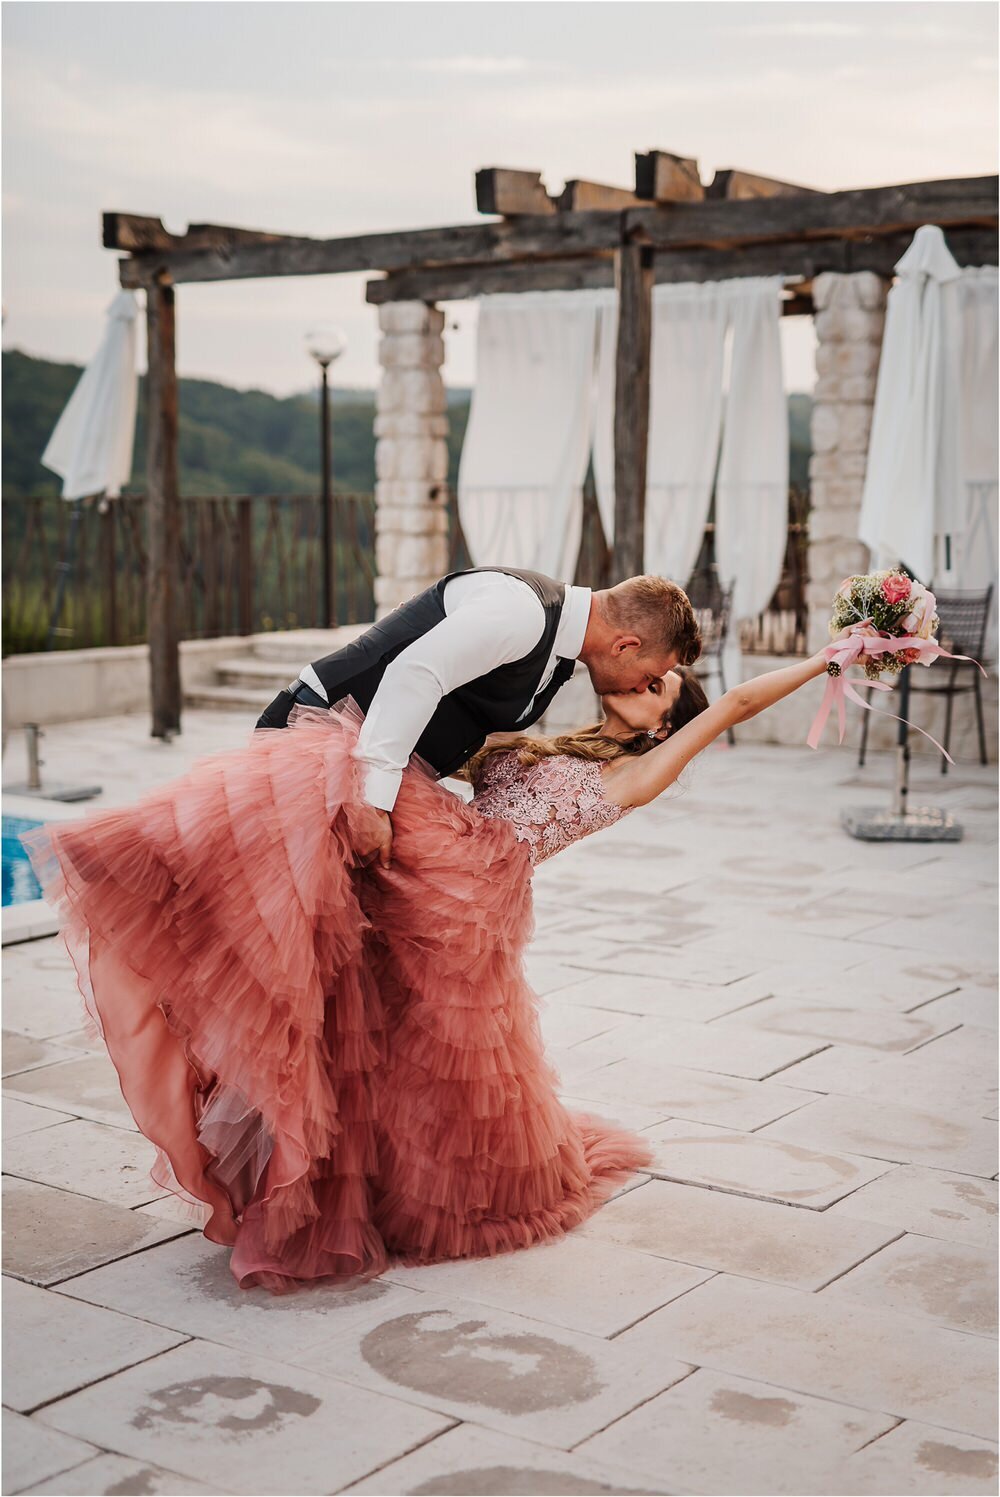 best of wedding photography 2019 photographer italy ireland tuscany santorini greece spain barcelona lake como chateux scotland destination wedding 0020.jpg